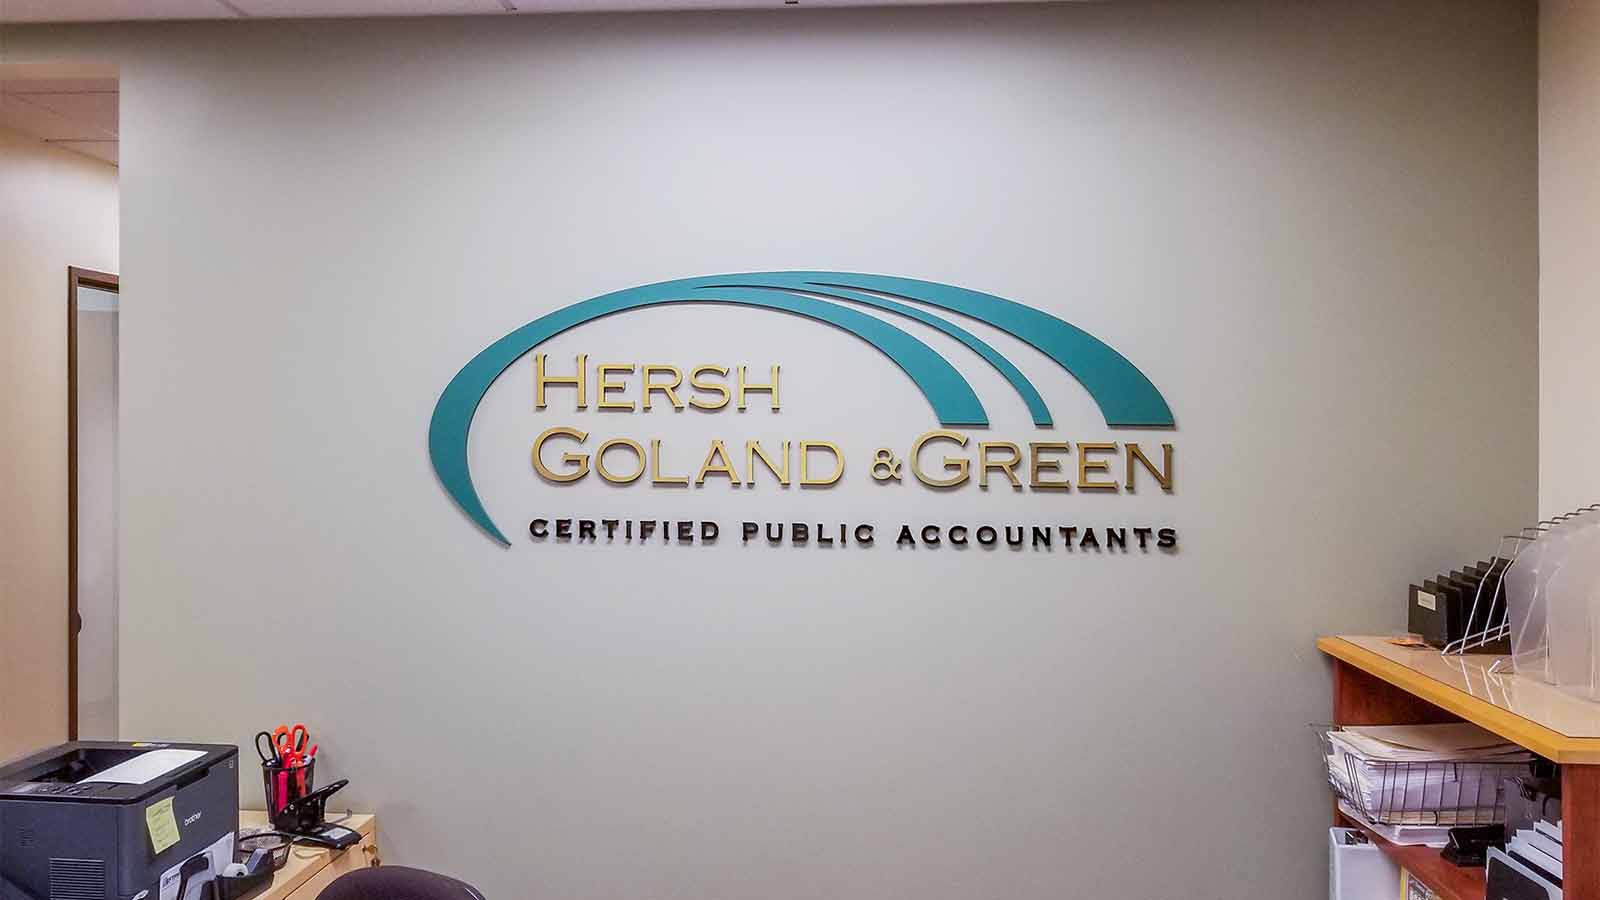 hersh goland and green lobby branding